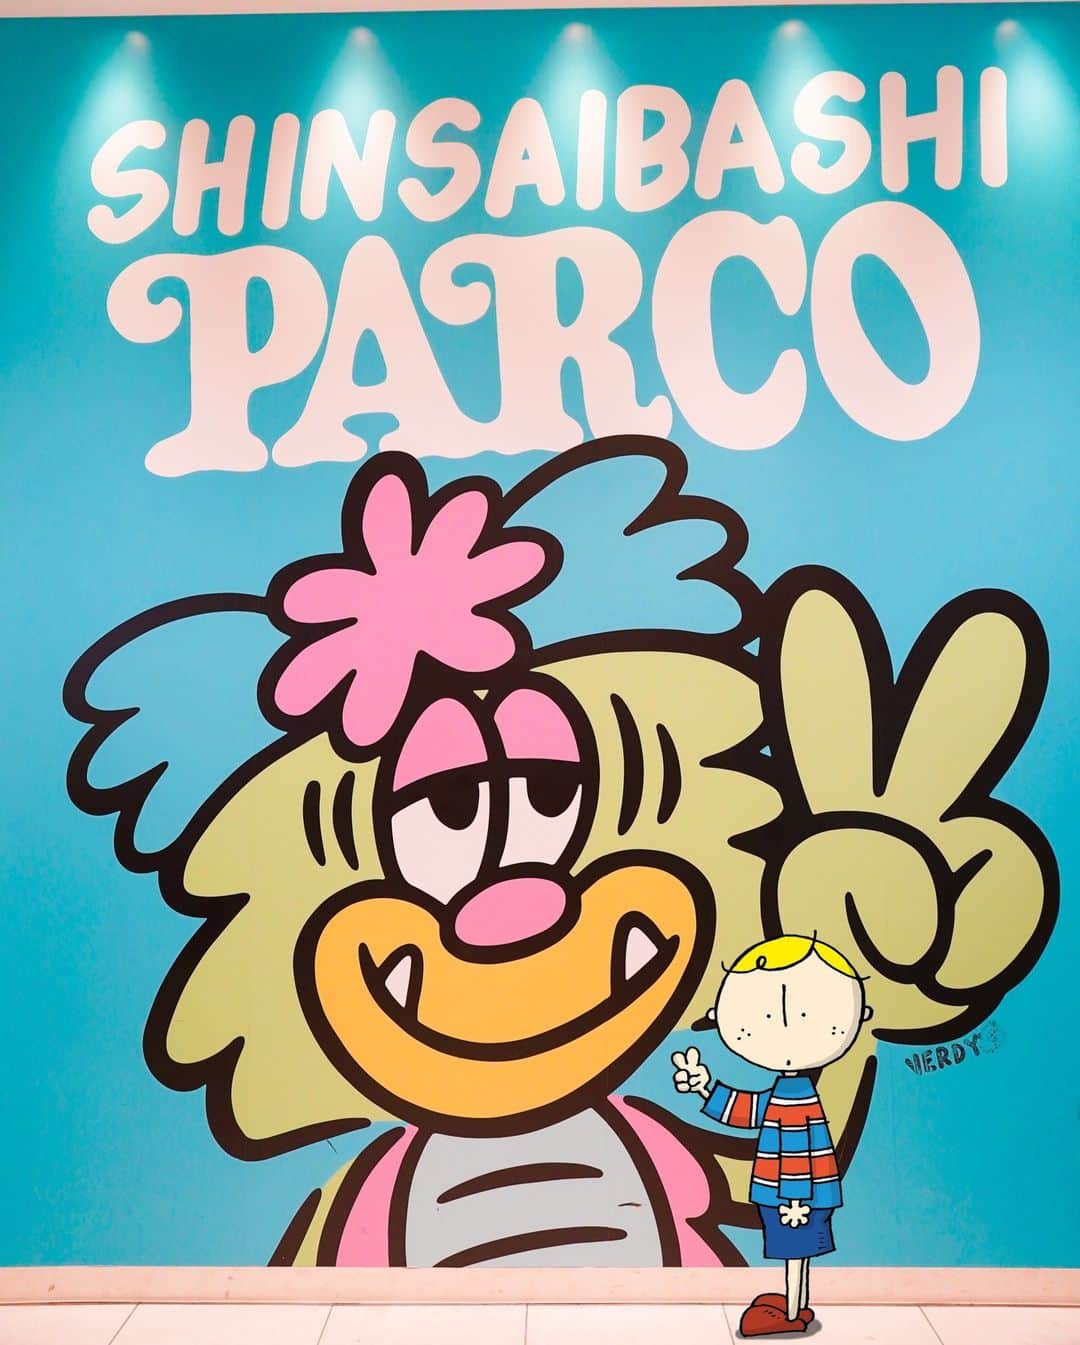 Osaka Bob（大阪観光局公式キャラクター）のインスタグラム：「Shinsaibashi PARCO is like a paradise for shopping lovers 🛍️. It combines fashion, art, design, and entertainment from both Japan and around the world. It's a hub for trends and offers a diverse and appealing food scene too 🎨🍽️. Don't forget to snap a photo of the cute wall paintings you'll find at Shinsaibashi PARCO! 🥰📷  心斎橋パルコはショッピング愛好者にとって楽園みたいやで🛍️。 国内外のファッション、アート、デザイン、エンターテインメントが融合。トレンドの発信地で、食も多彩で魅力的やで🎨🍽️。 心斎橋パルコでキュートな壁画を見つけたで🥰思わず写真をパシャリ📷  —————————————————————  #maido #withOsakaBob #OSAKA #osakatrip #japan #nihon #OsakaJapan #大坂 #오사카 #大阪 #Оsака #Осака #โอซาก้า #大阪観光 #sightseeing #Osakatravel #Osakajepang #traveljepang #osakatravel #osakatrip #道頓堀 #PARCO」